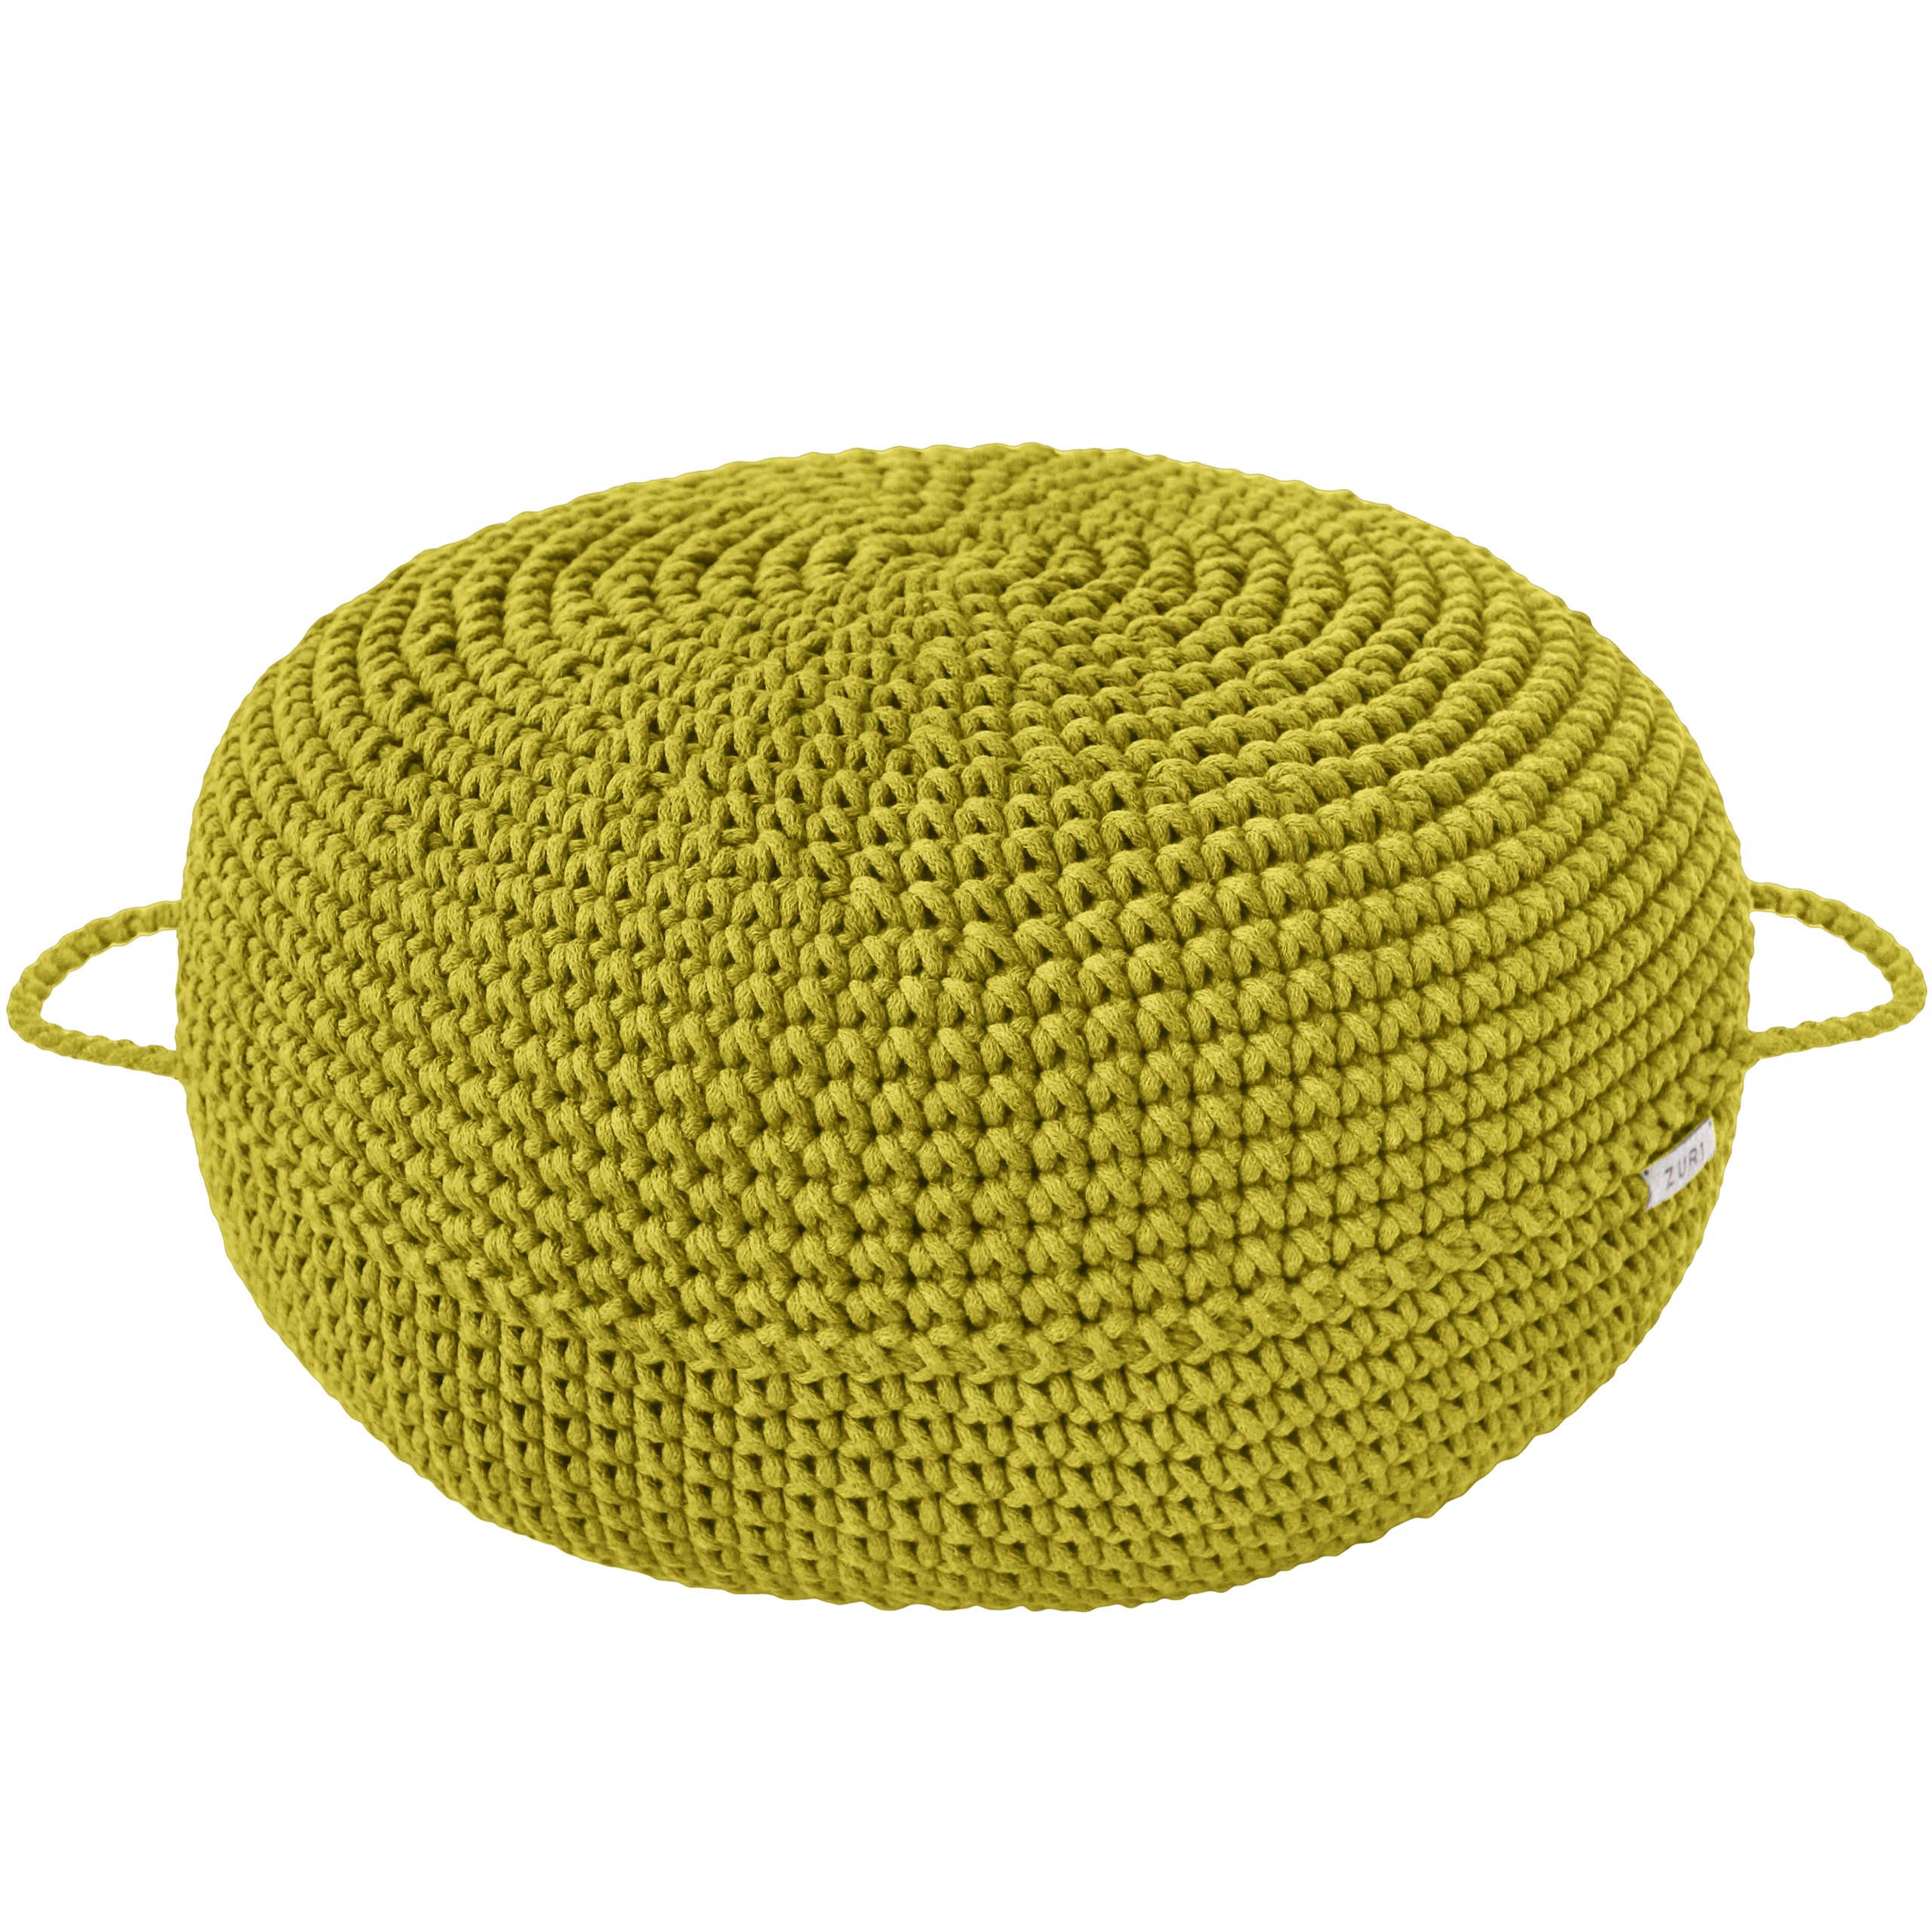 Crochet ottoman |  GOLDEN KIWI